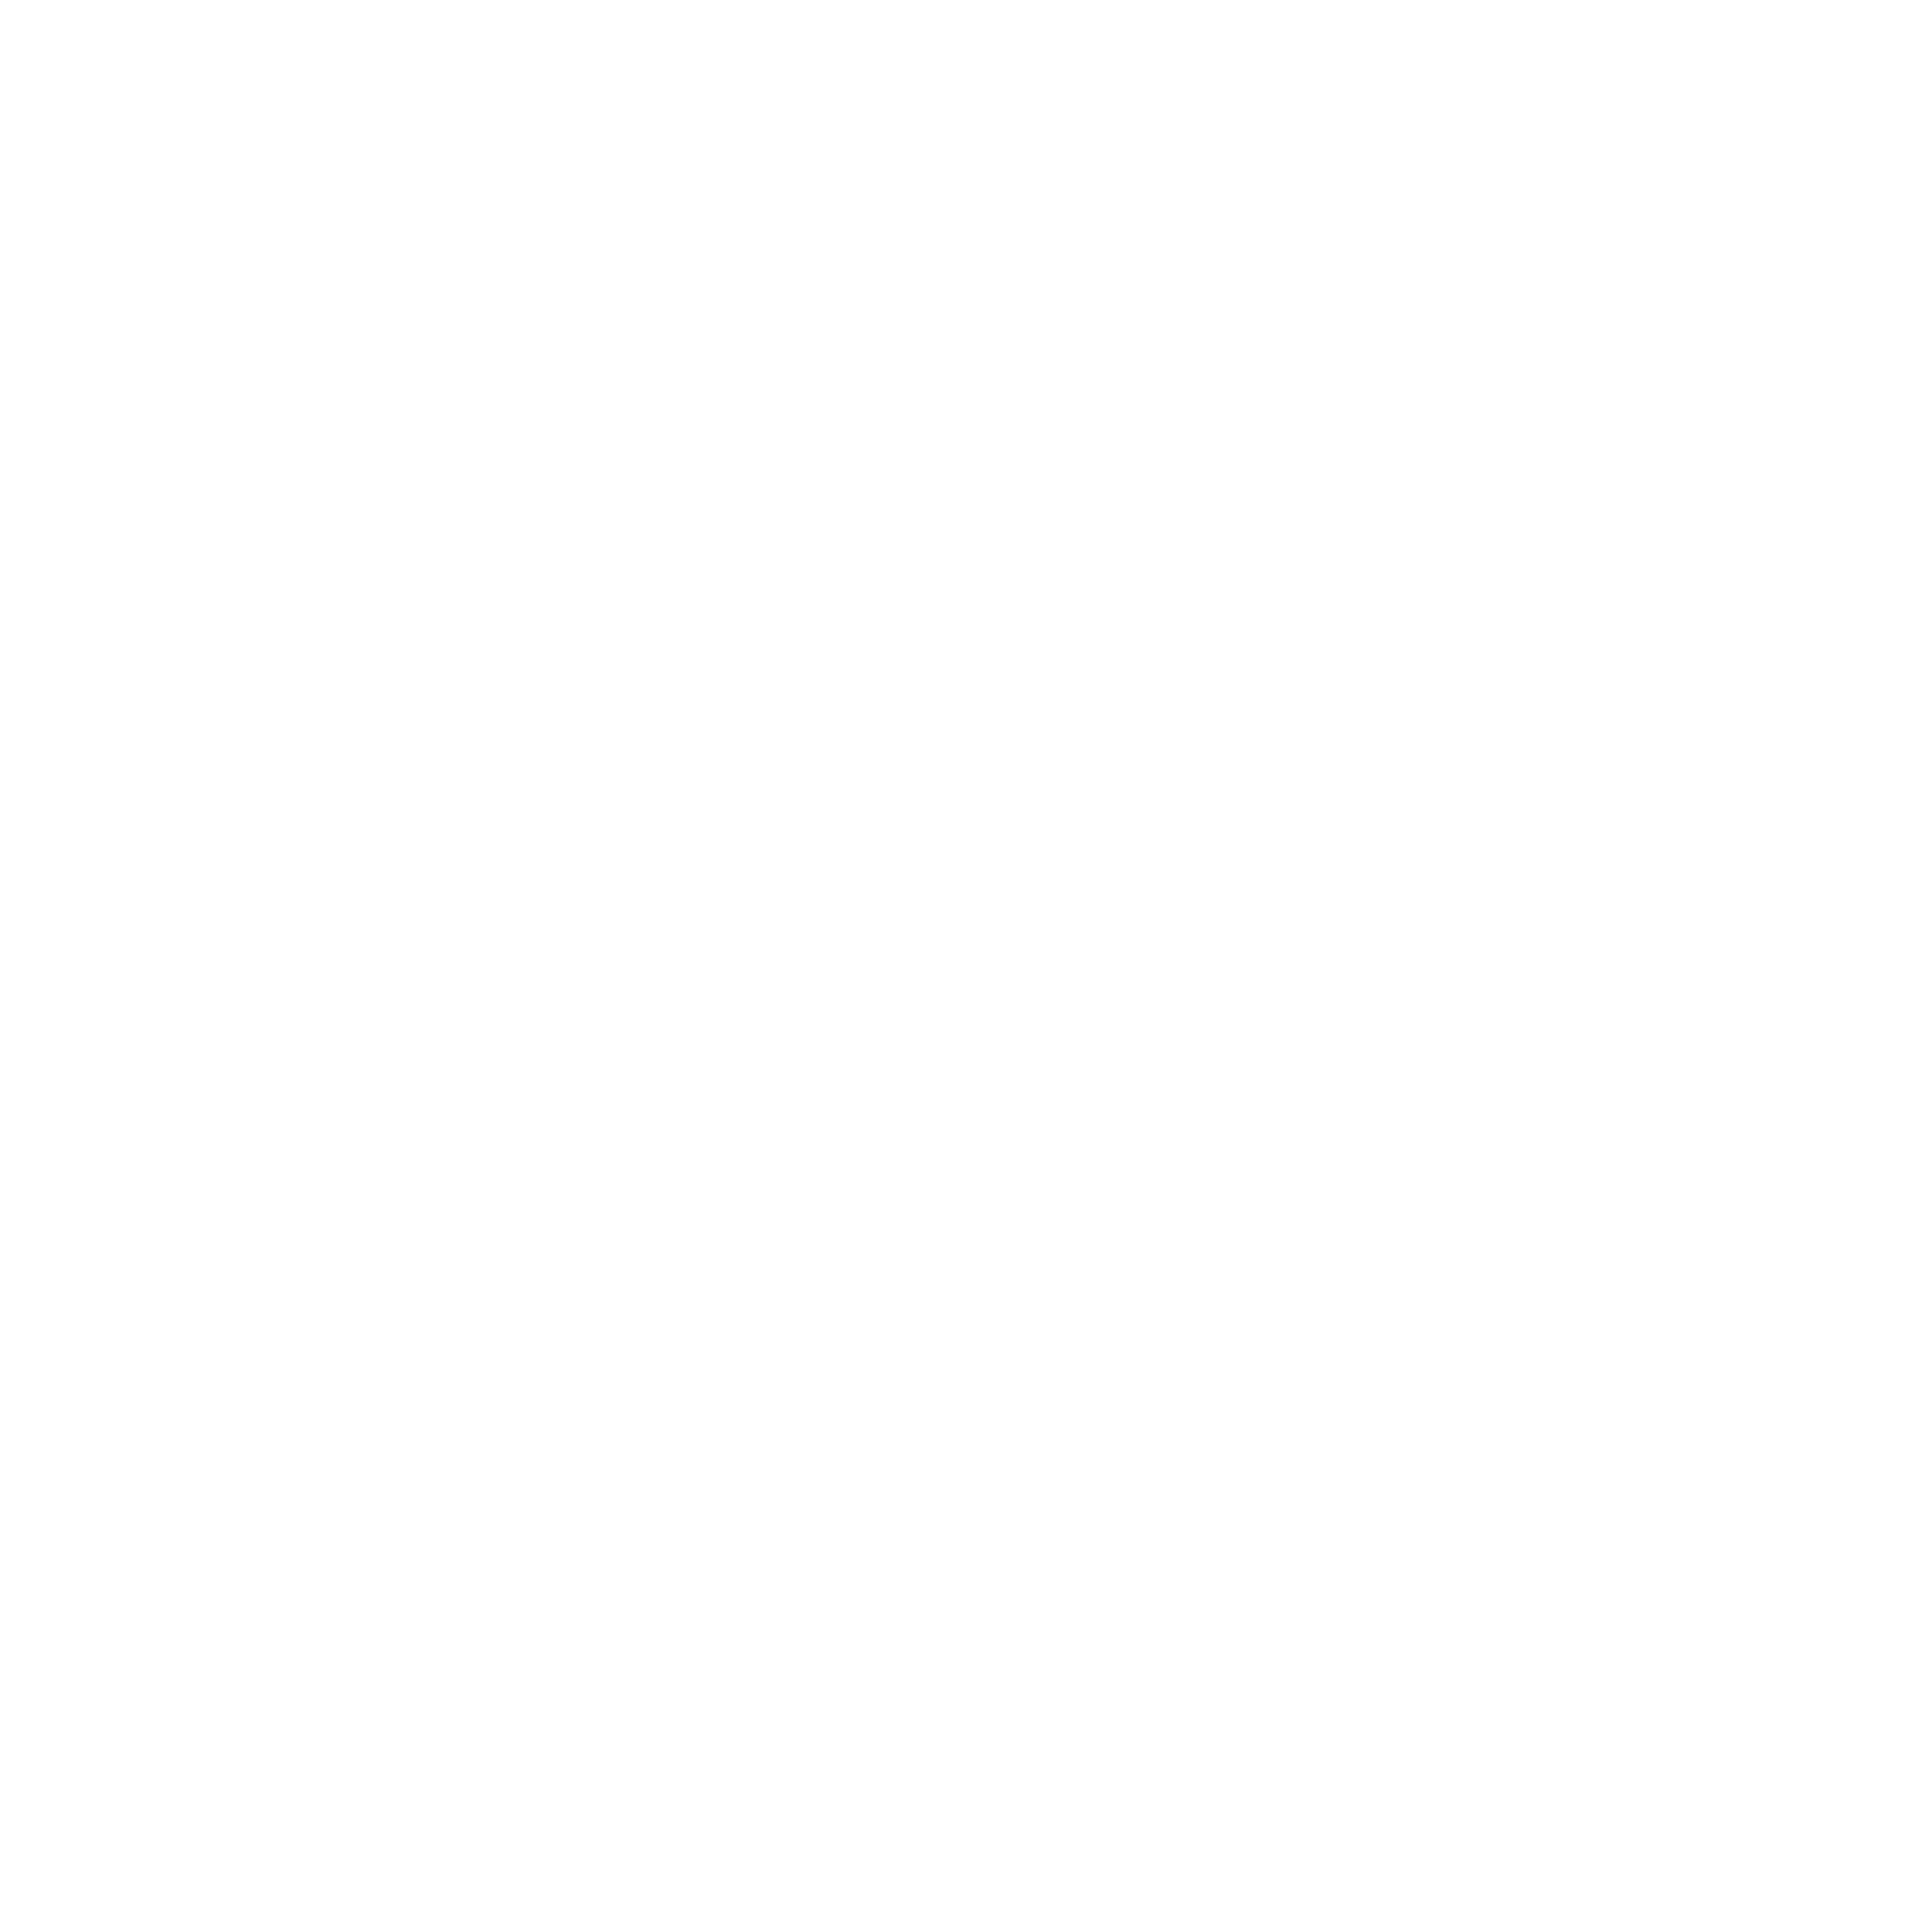 Microsoft Office Excel Logo - Microsoft Office Excel Logo PNG Transparent & SVG Vector - Freebie ...